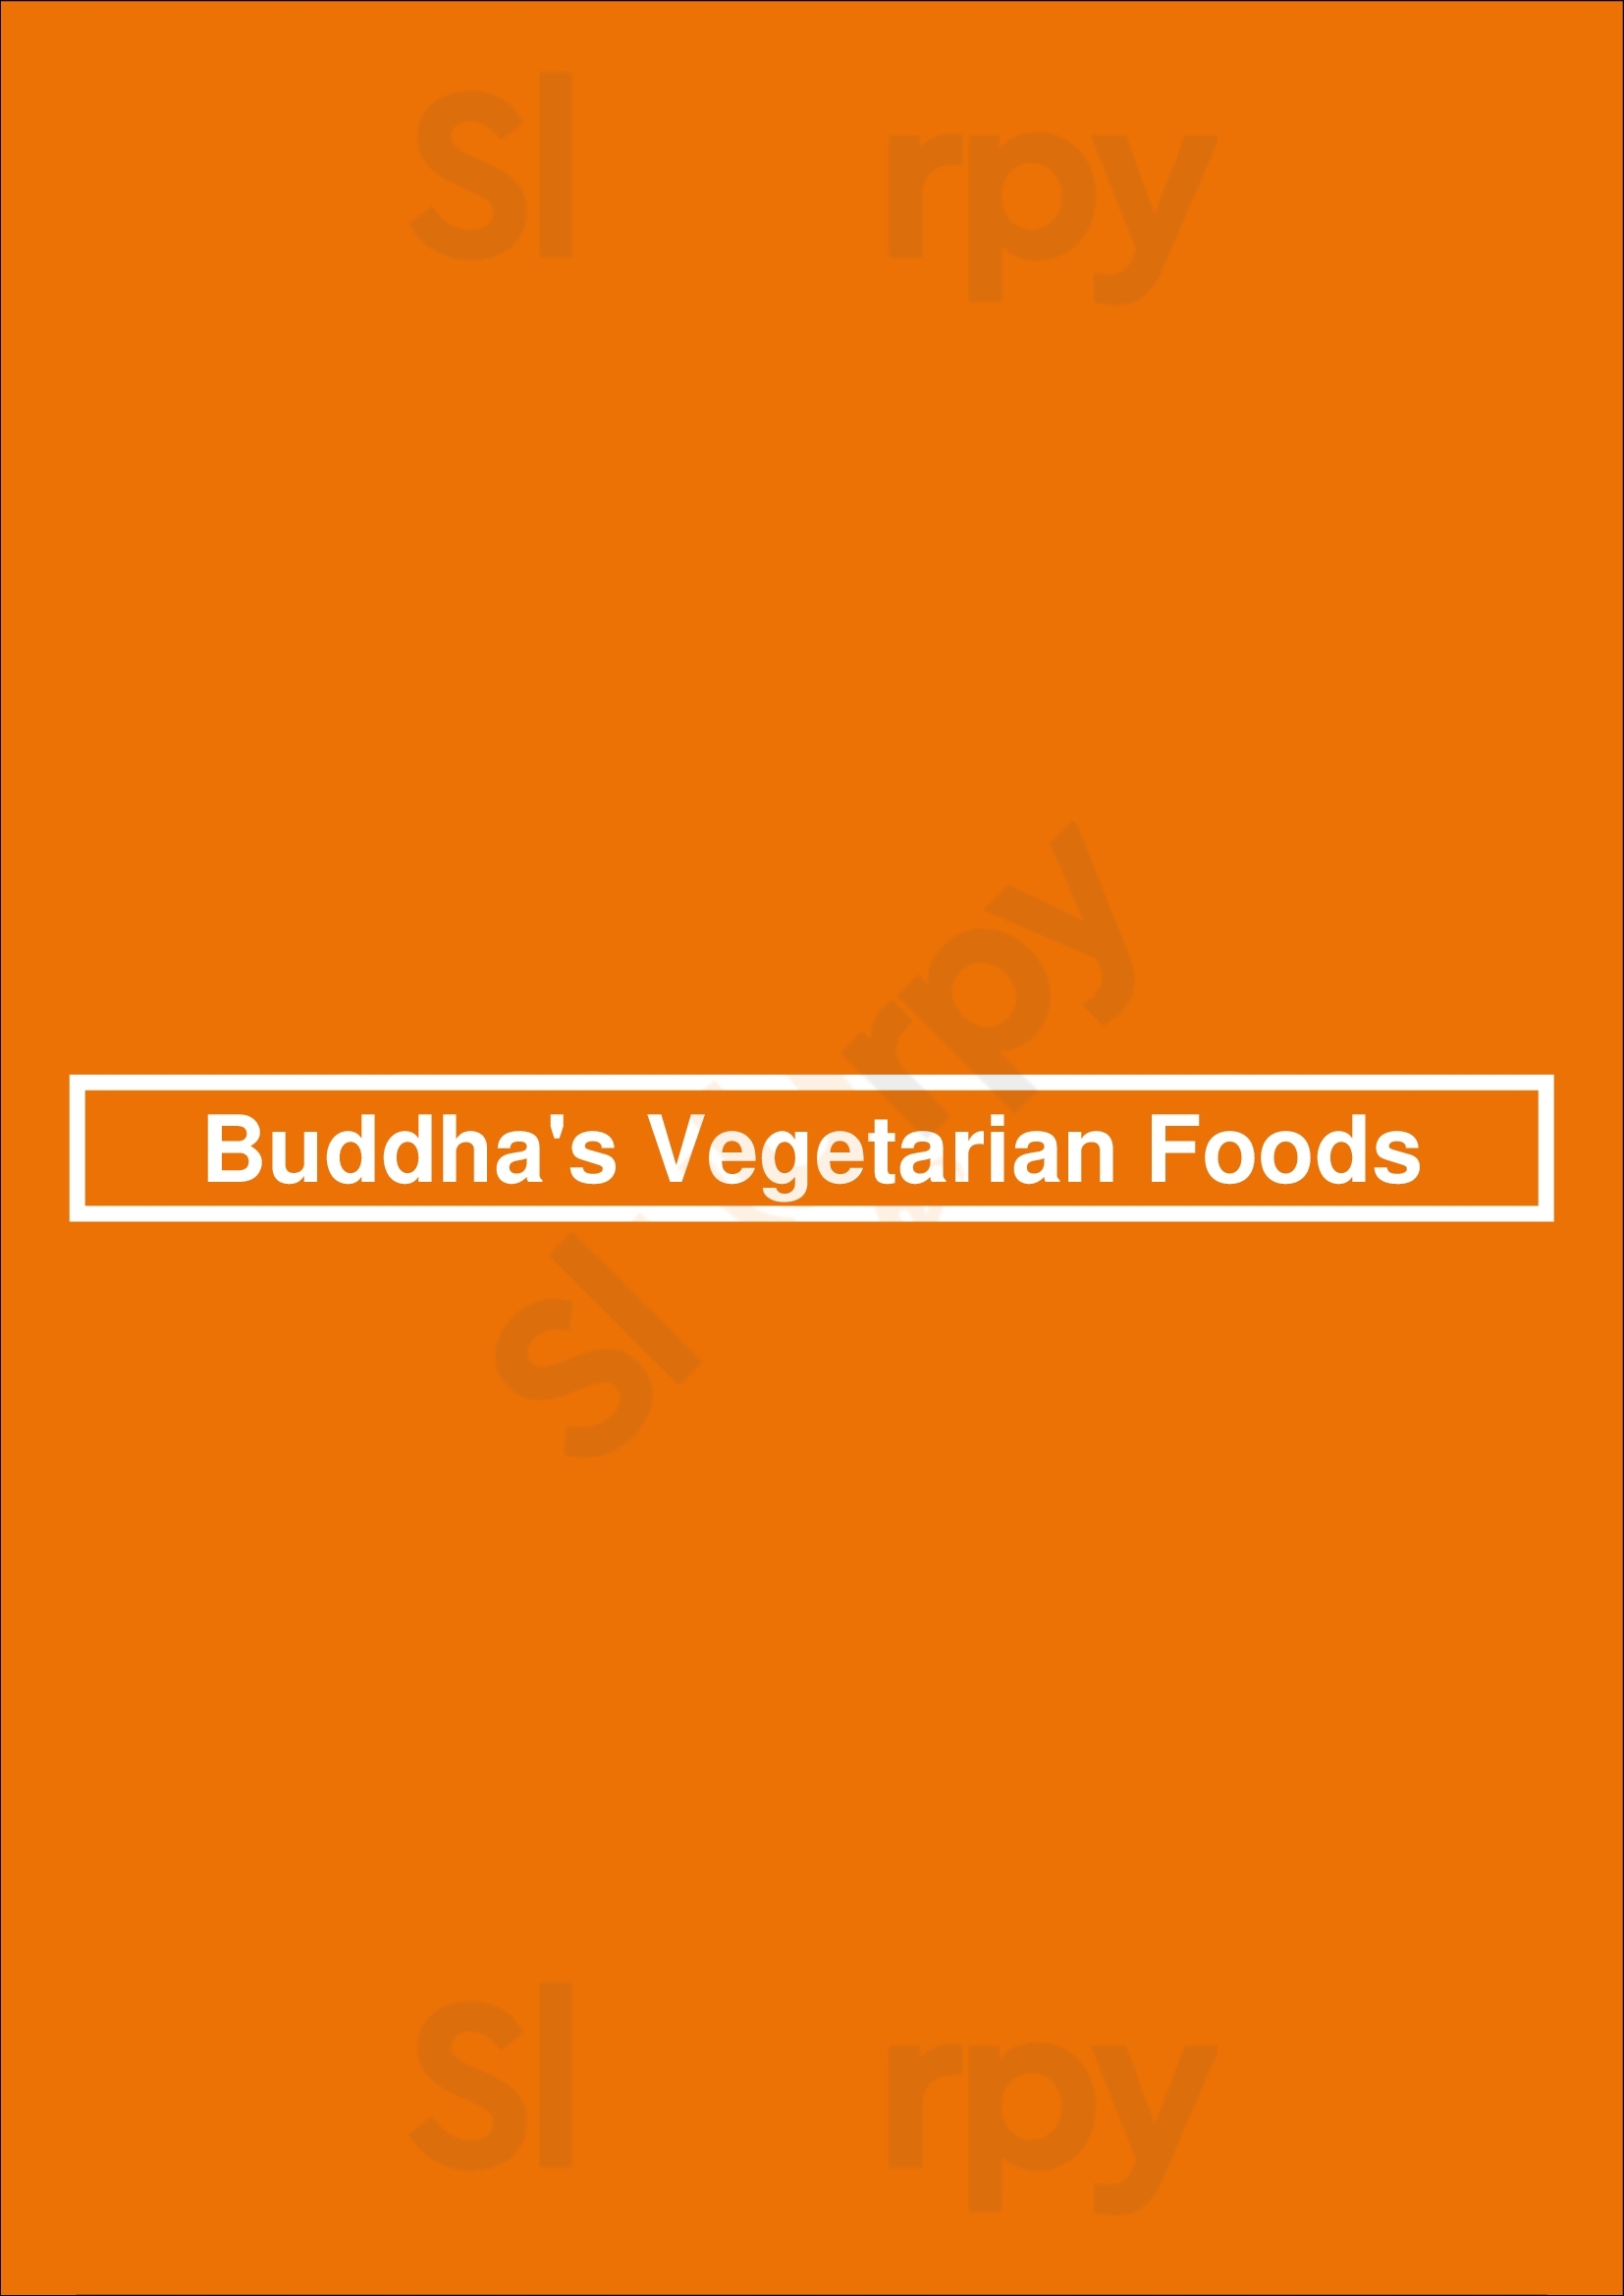 Buddha's Vegetarian Foods Toronto Menu - 1